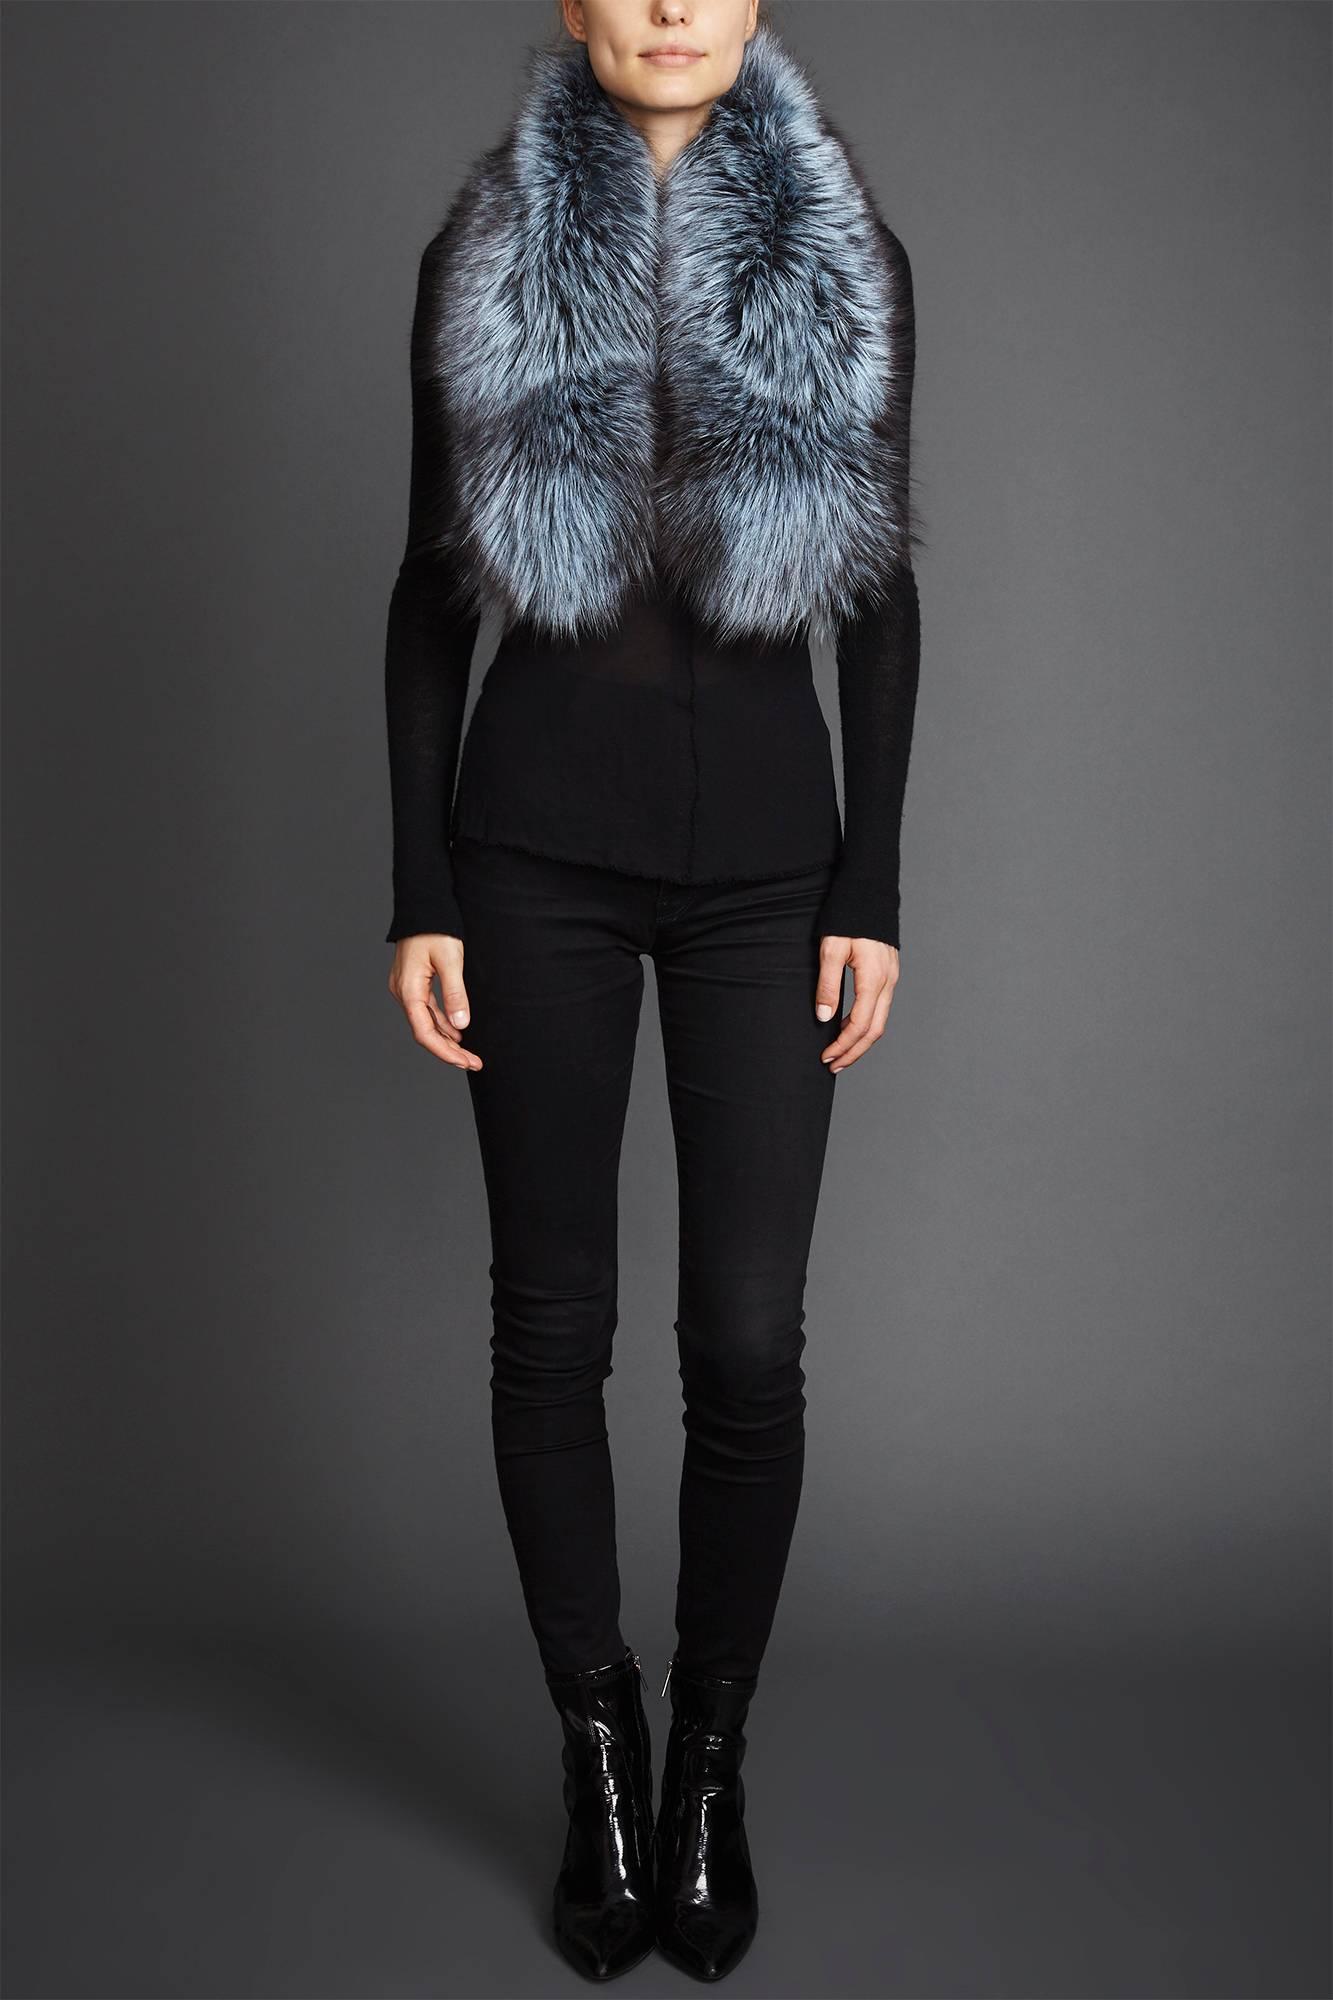 Gray Verheyen London Lapel Cross-through Collar in Iced Topaz Fox Fur - Brand New